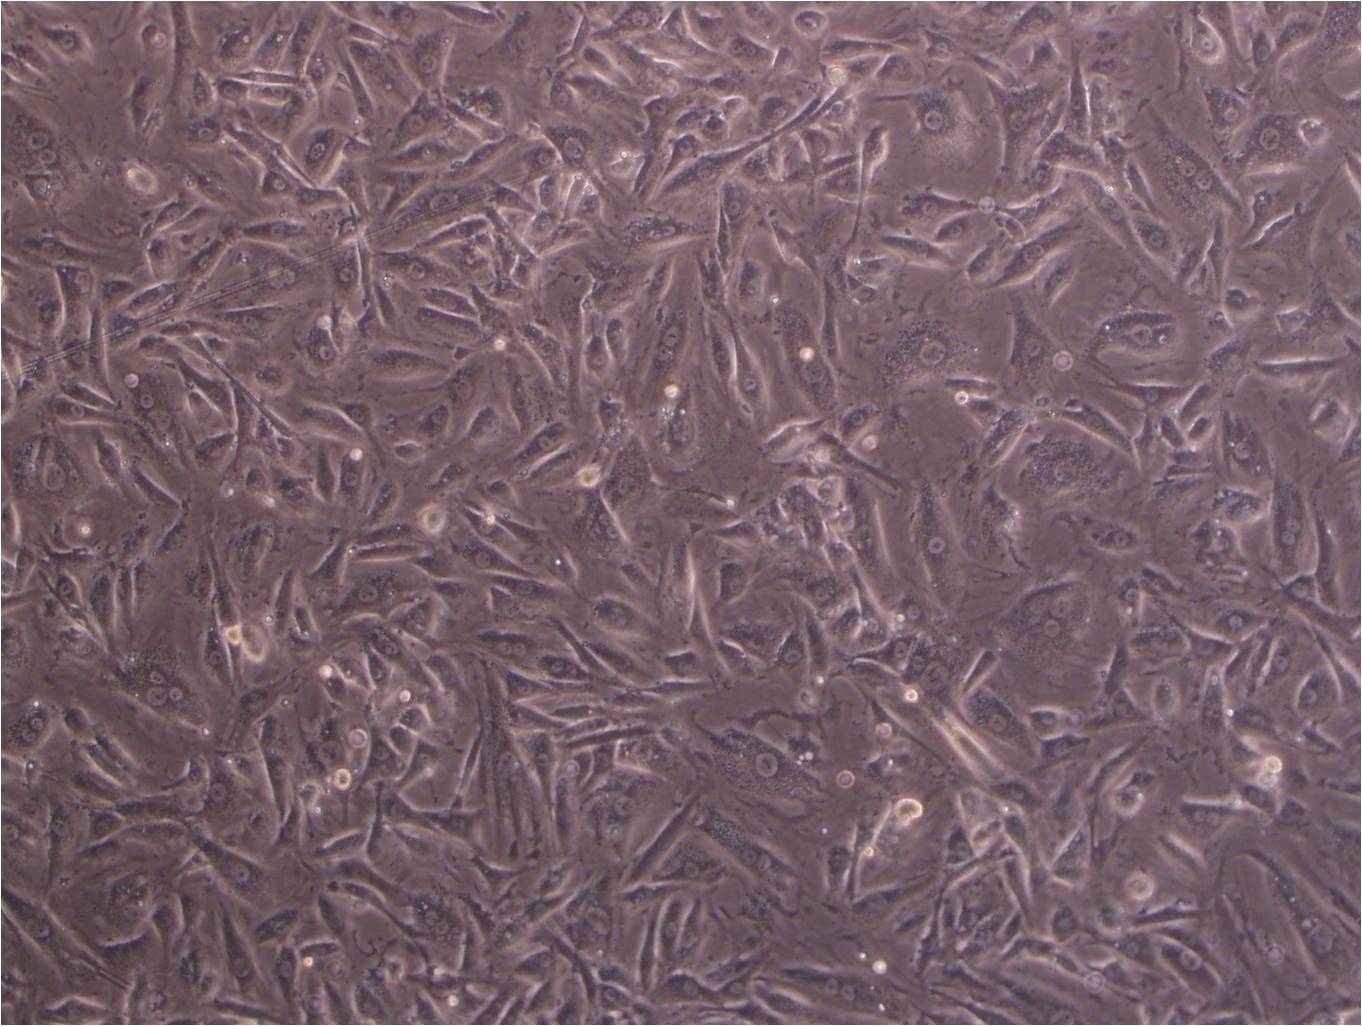 L2 epithelioid cells大鼠肺泡上皮细胞系